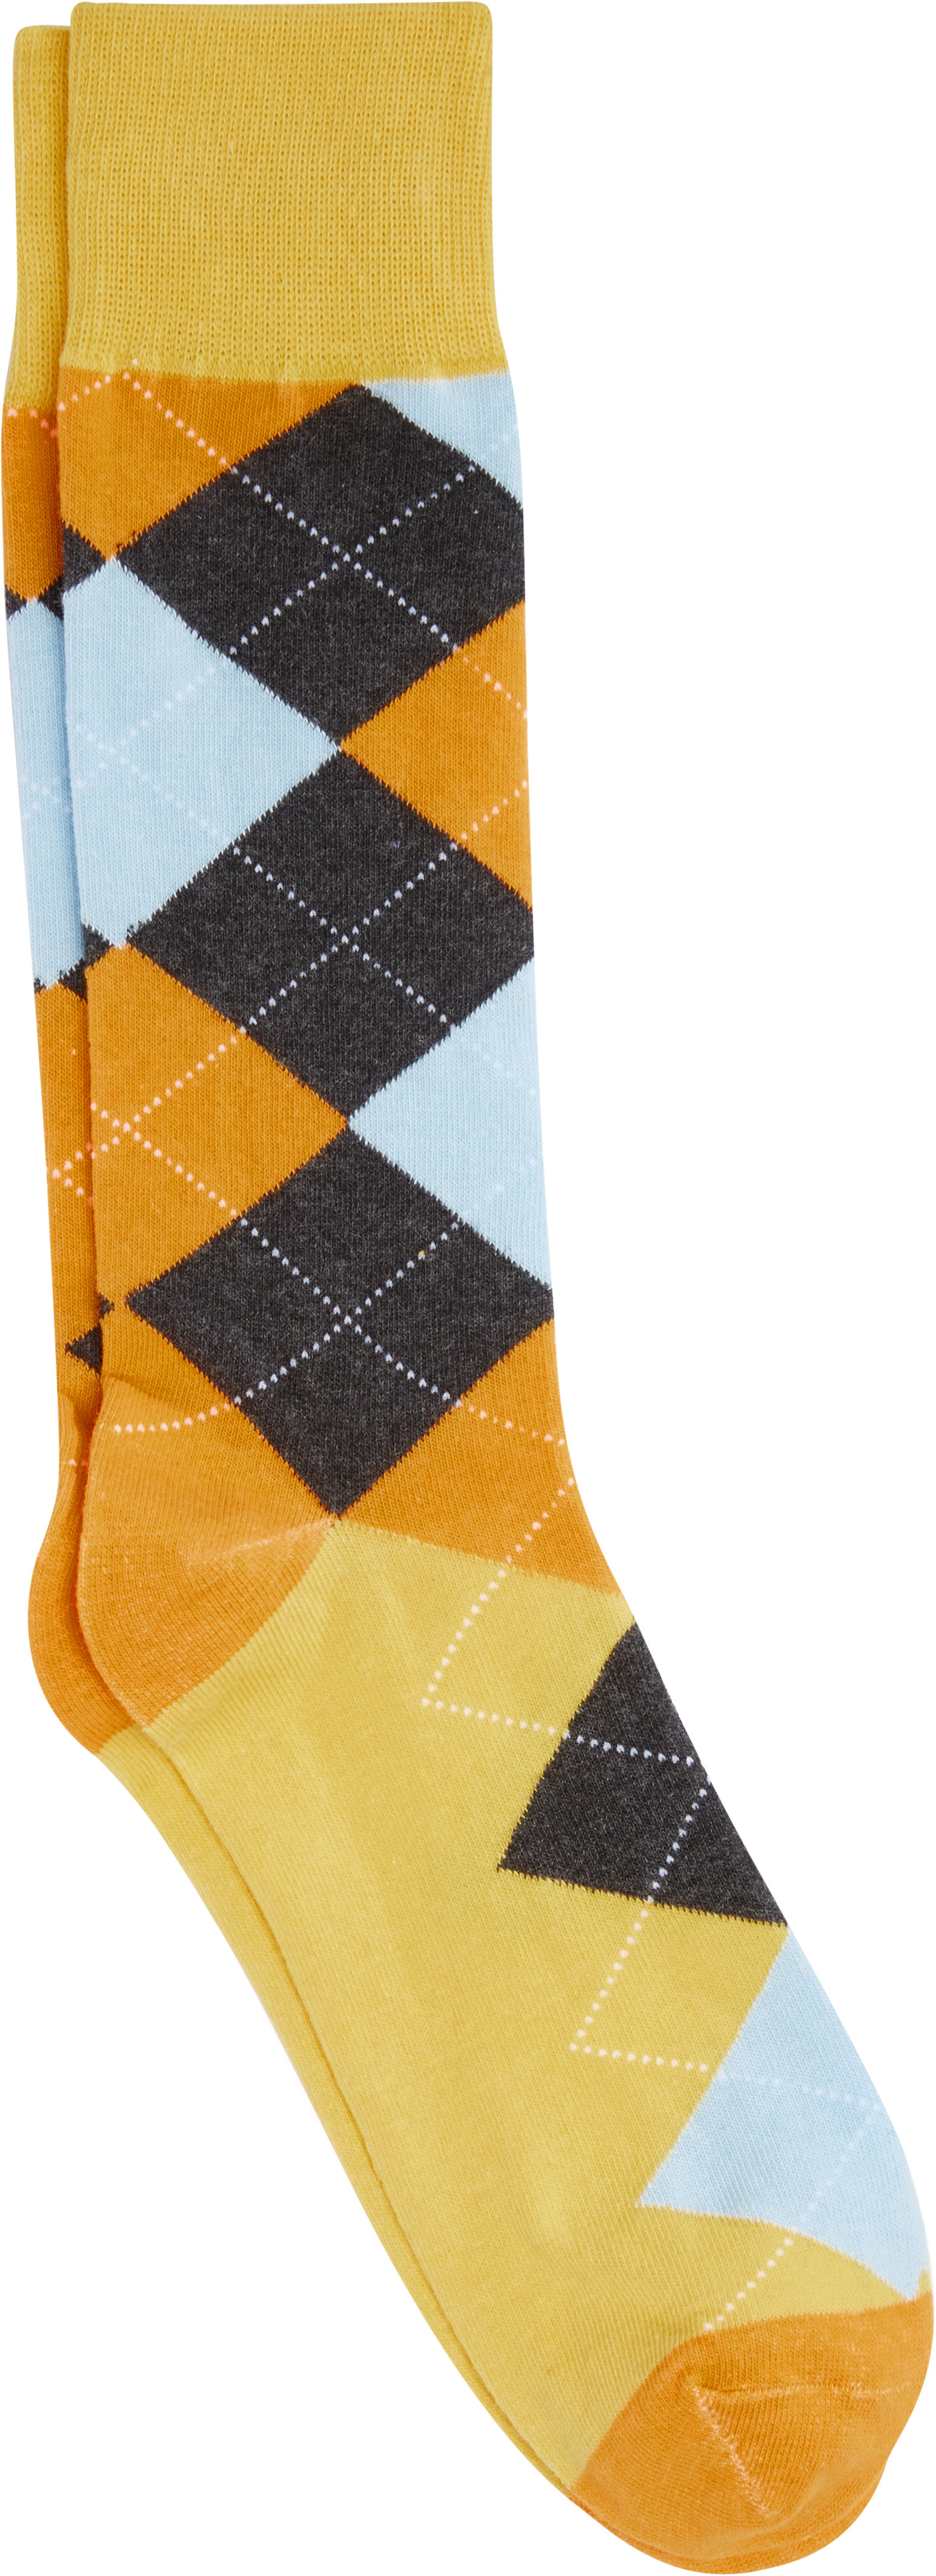 Egara Yellow Argyle Socks - Men's Accessories | Men's Wearhouse